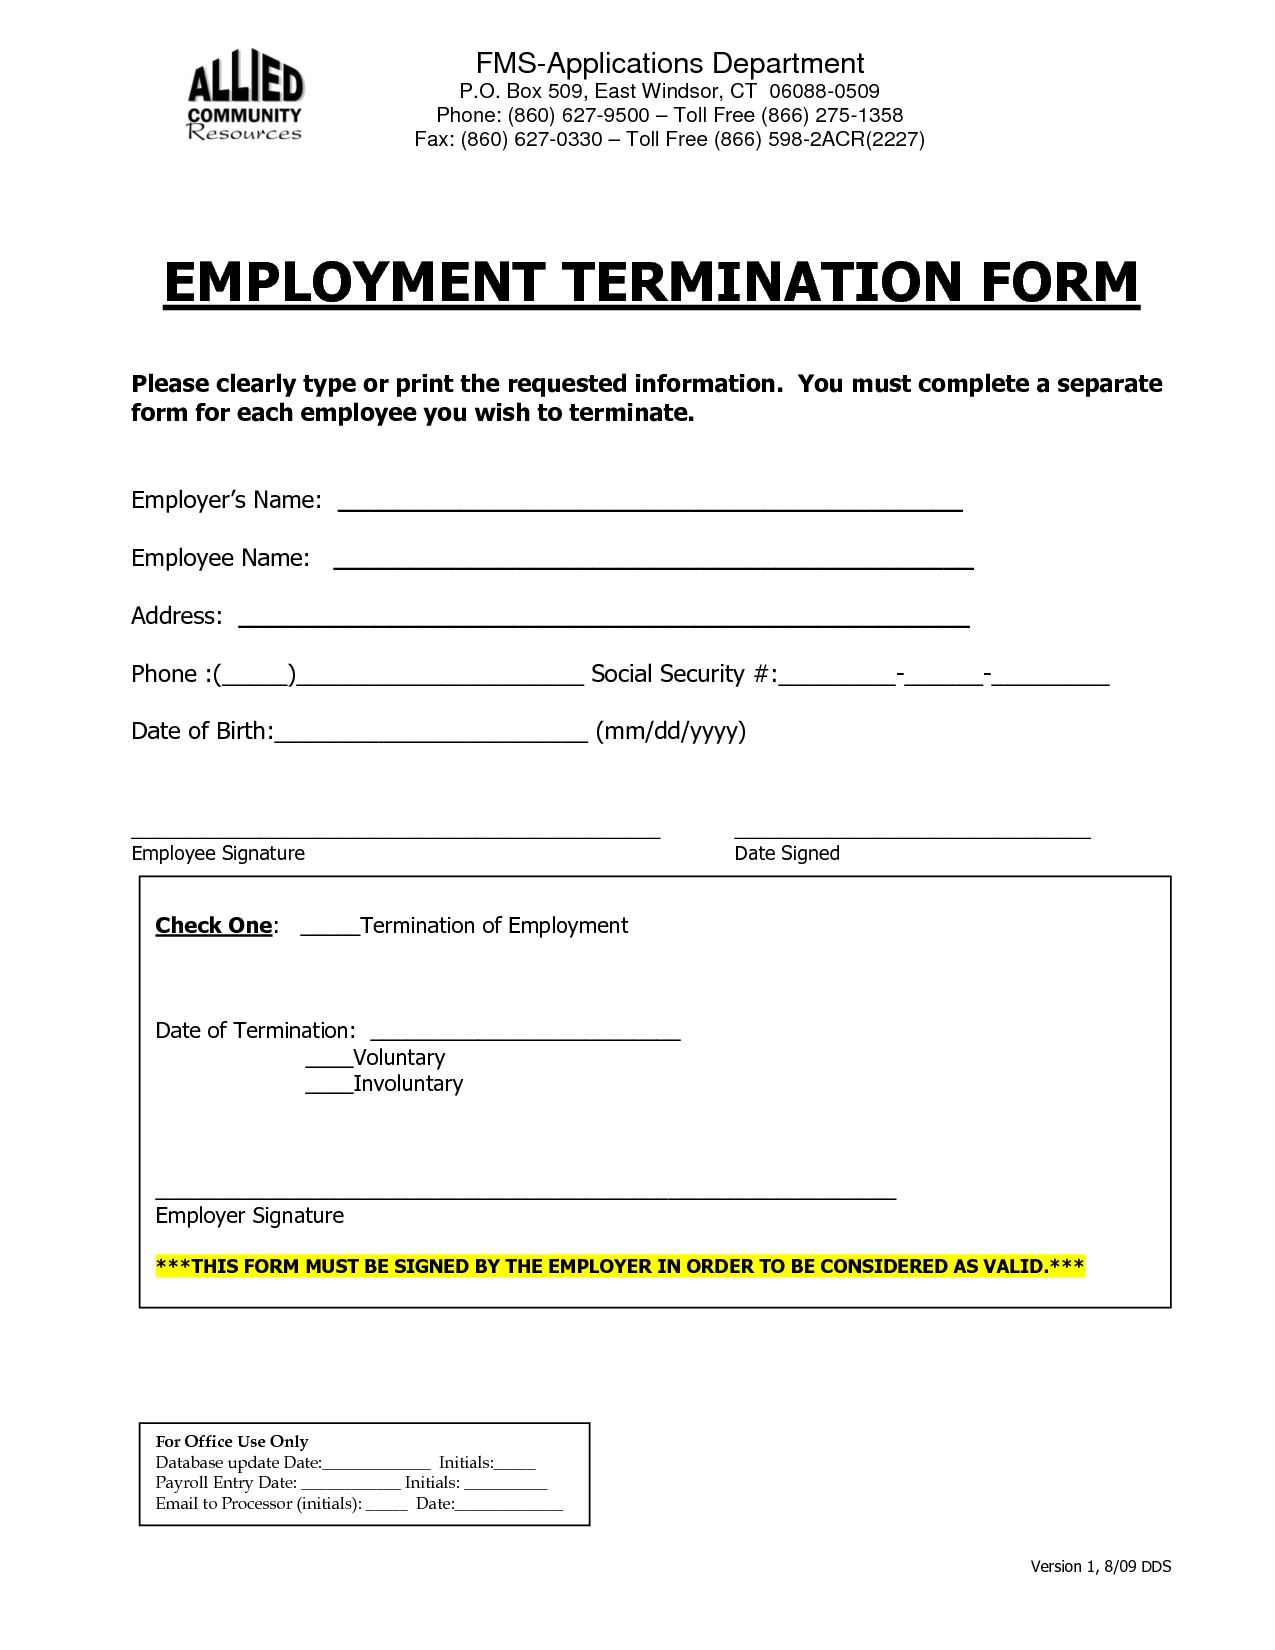 reason for leaving fired job application